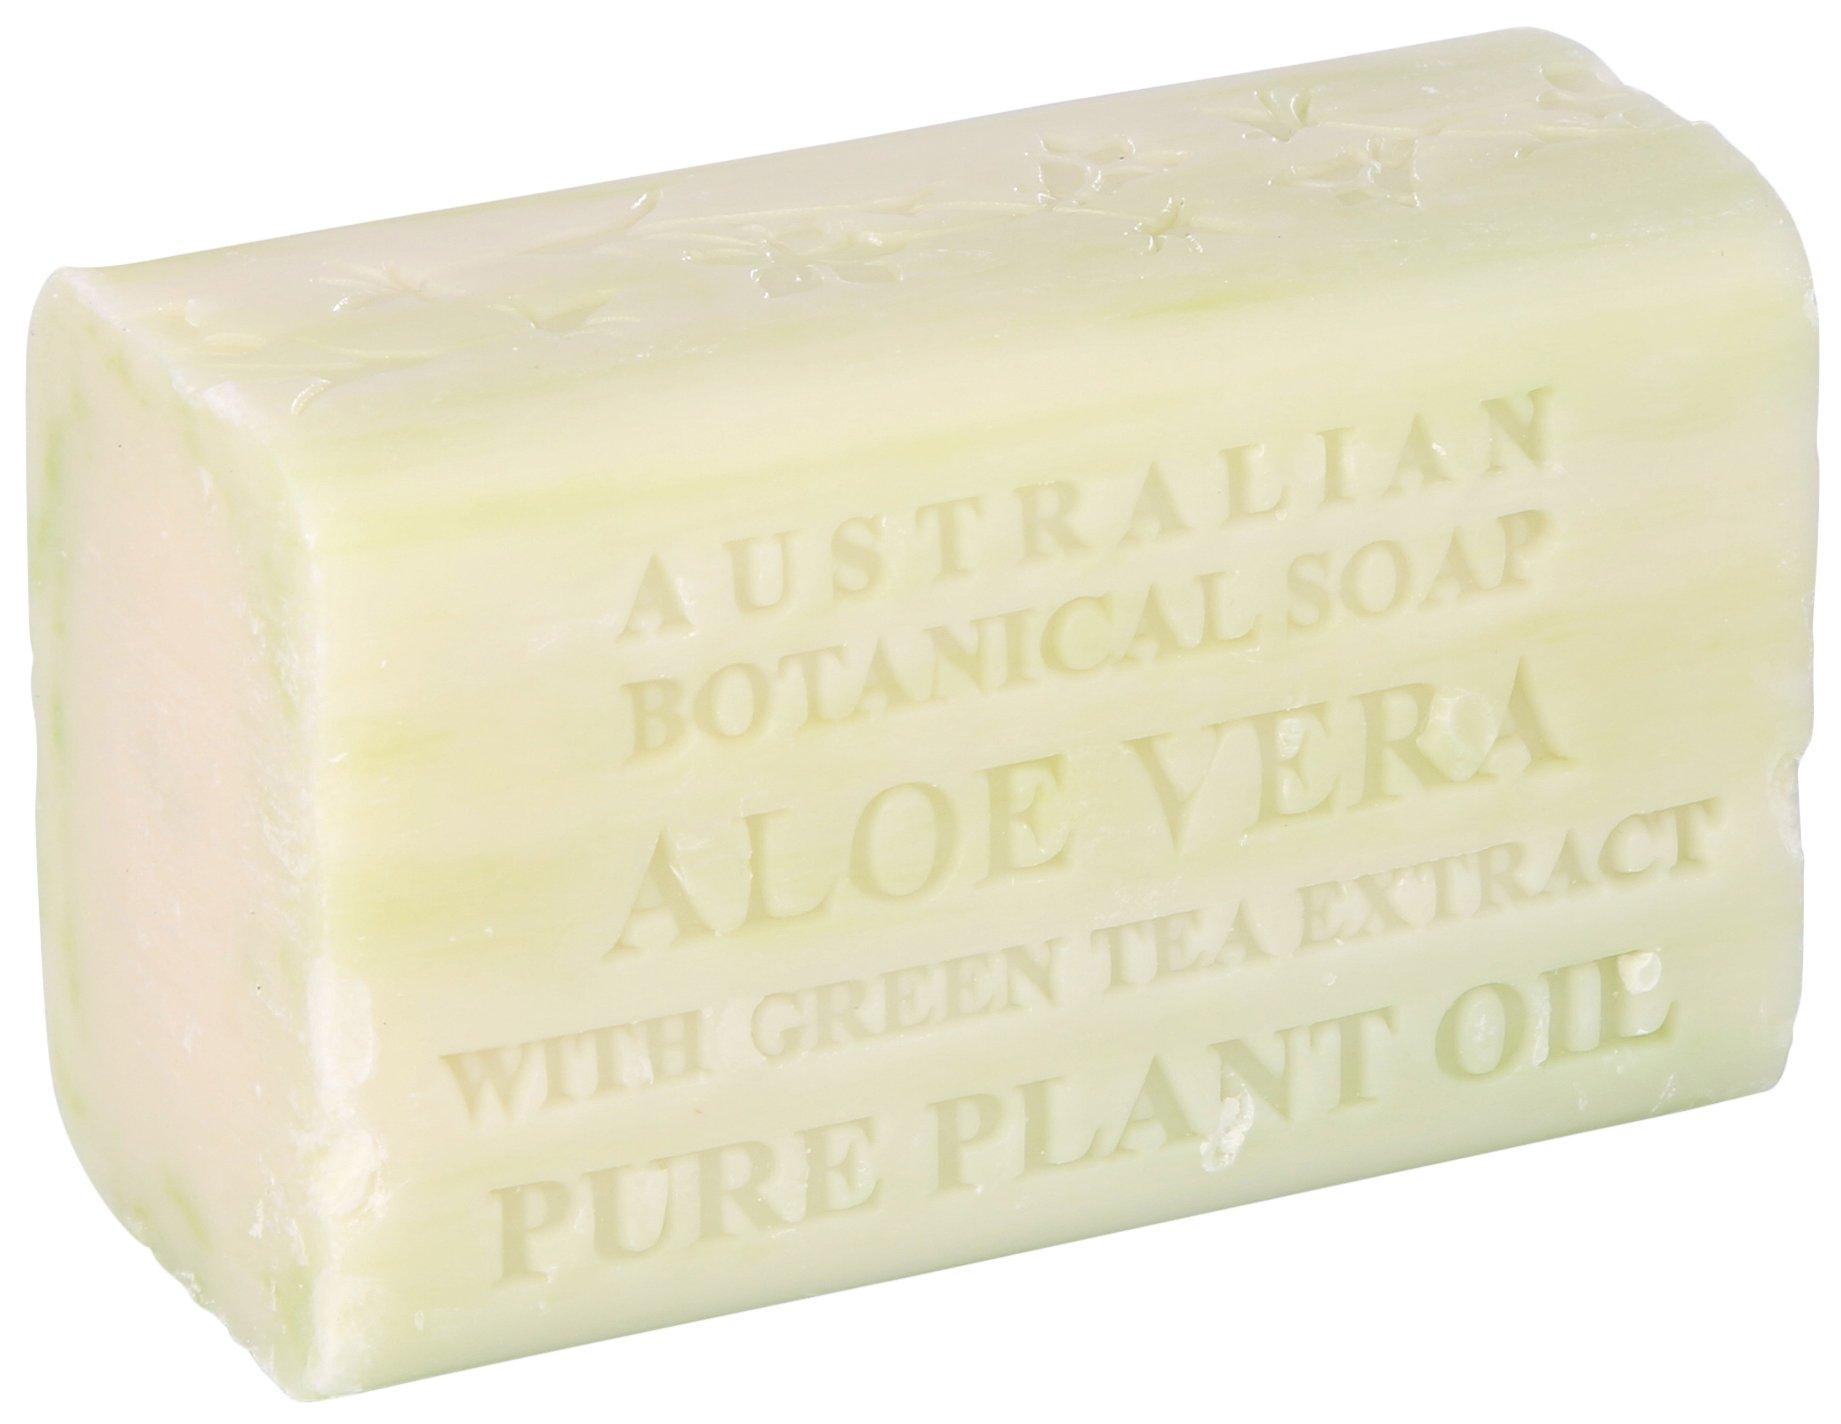 Australian Botanical 6.6 Oz. Aloe Vera Bar Soap